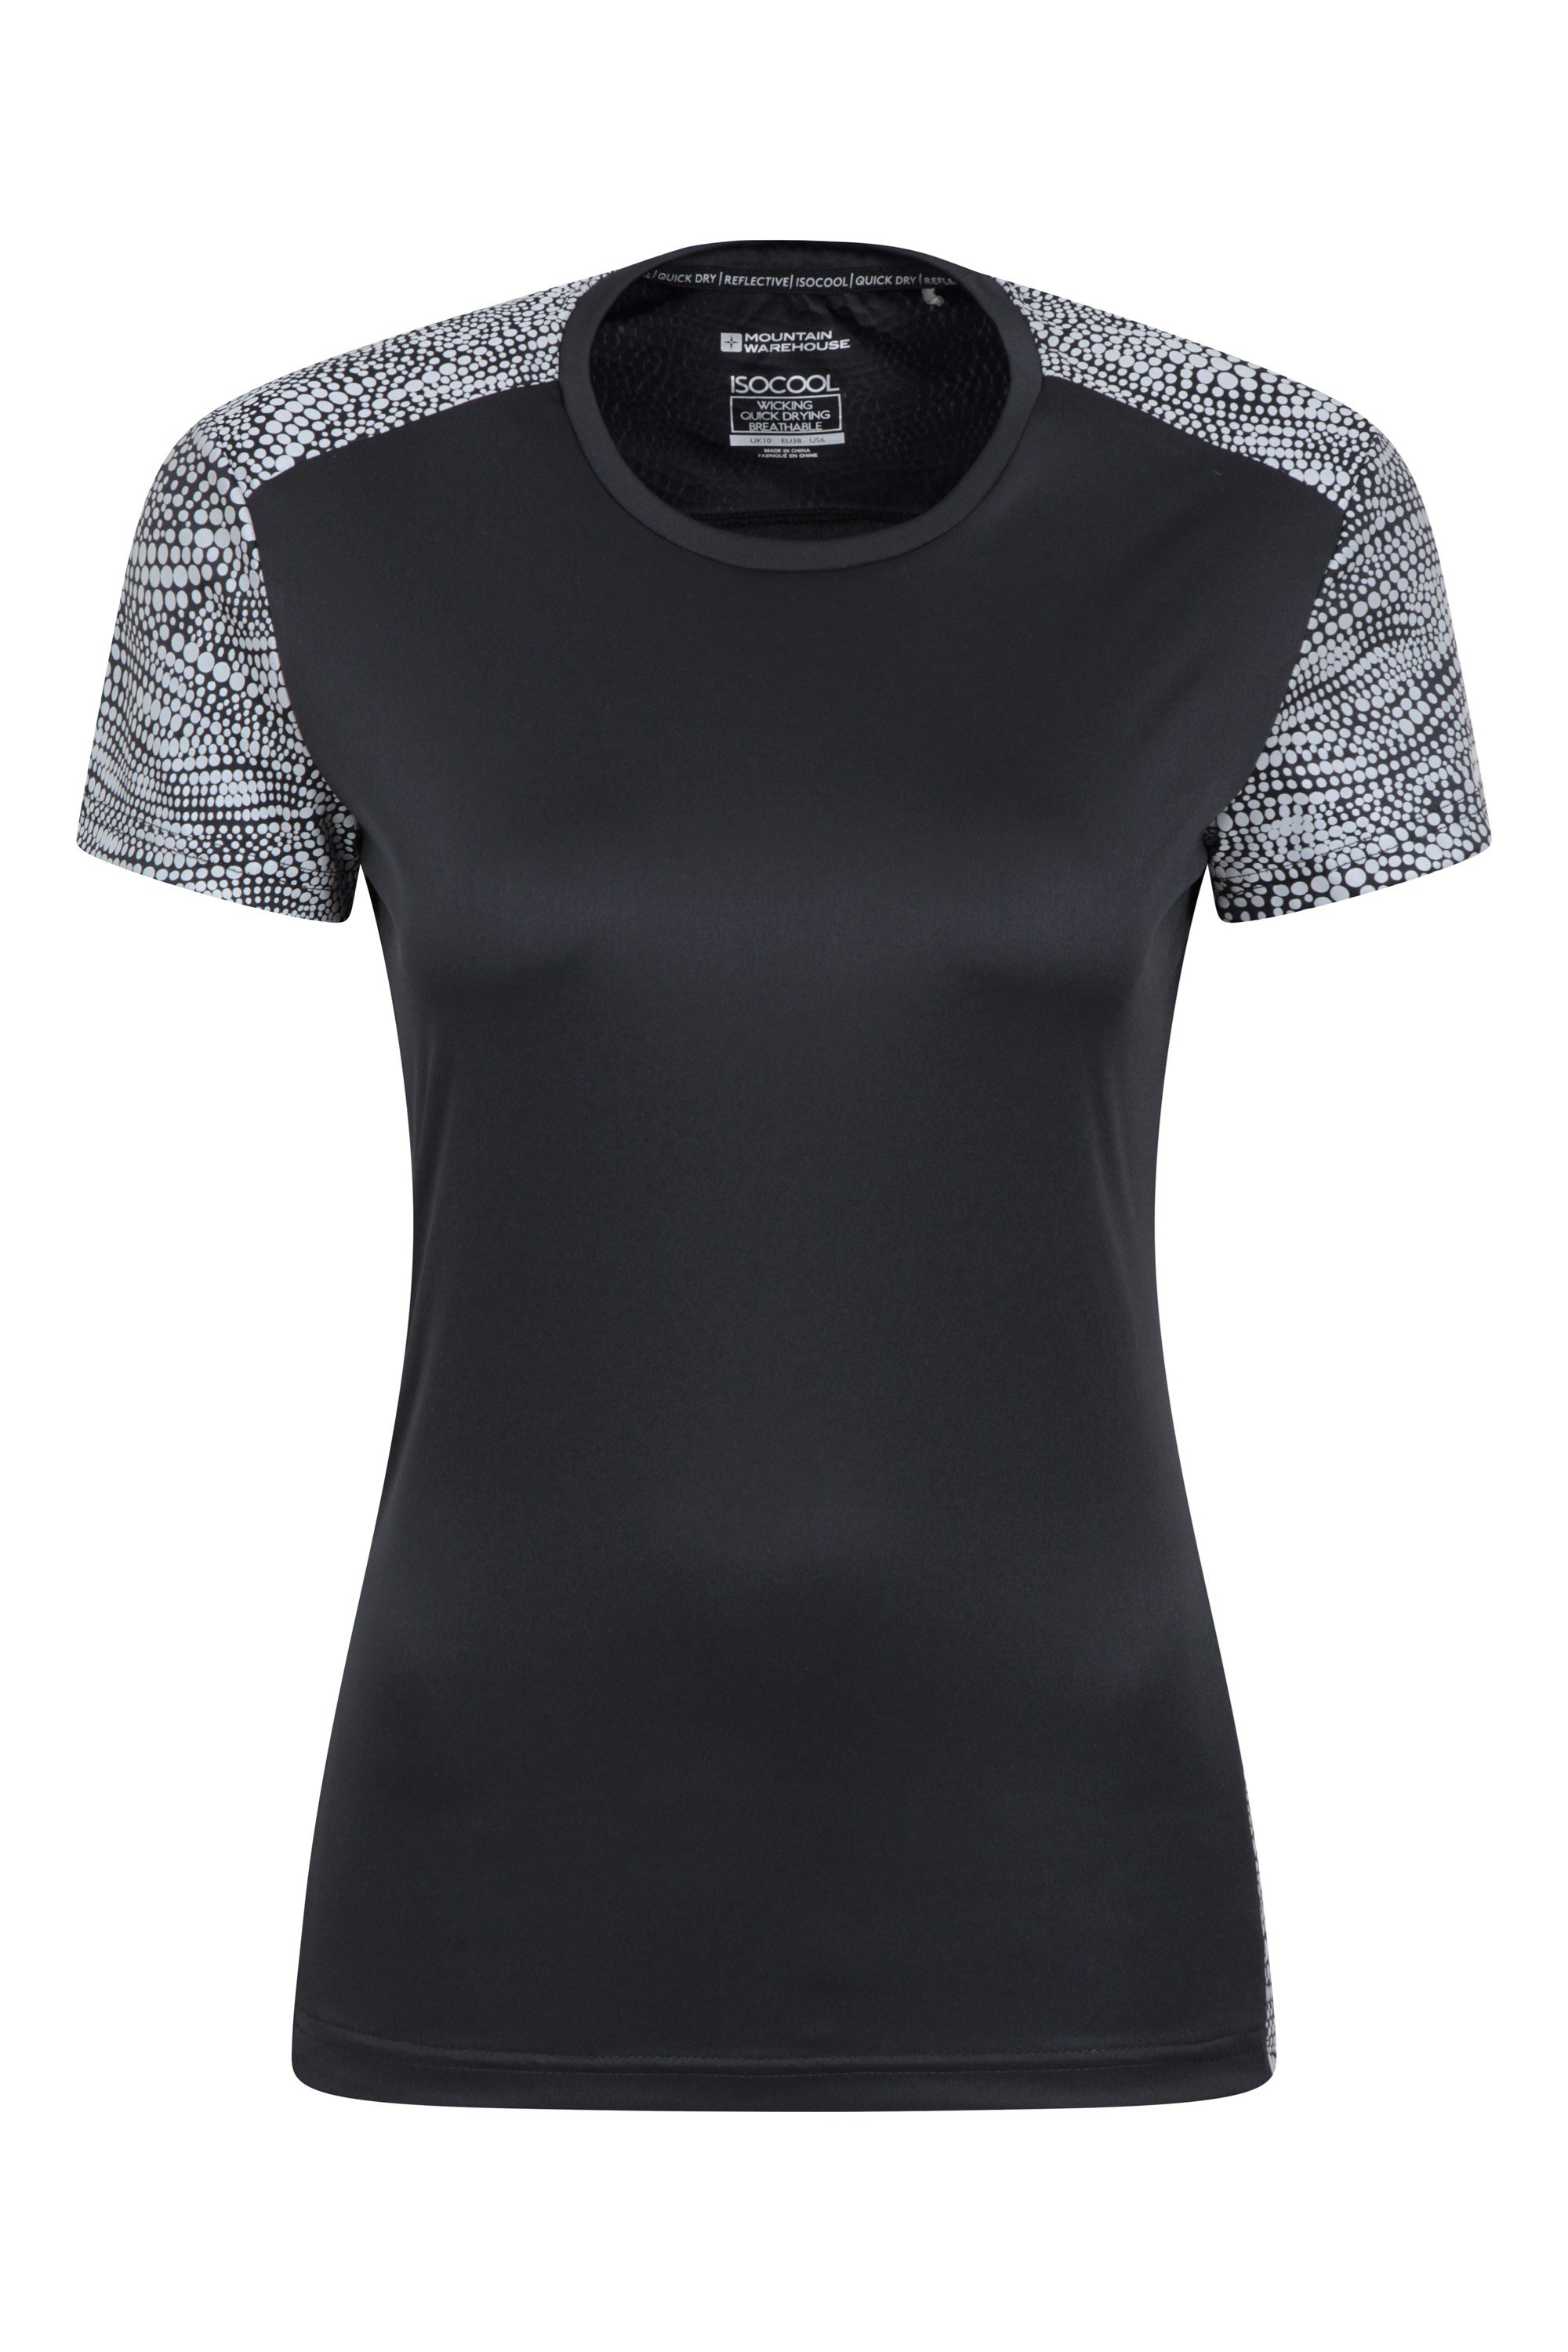 Pro Running Reflective Womens T-shirt Black